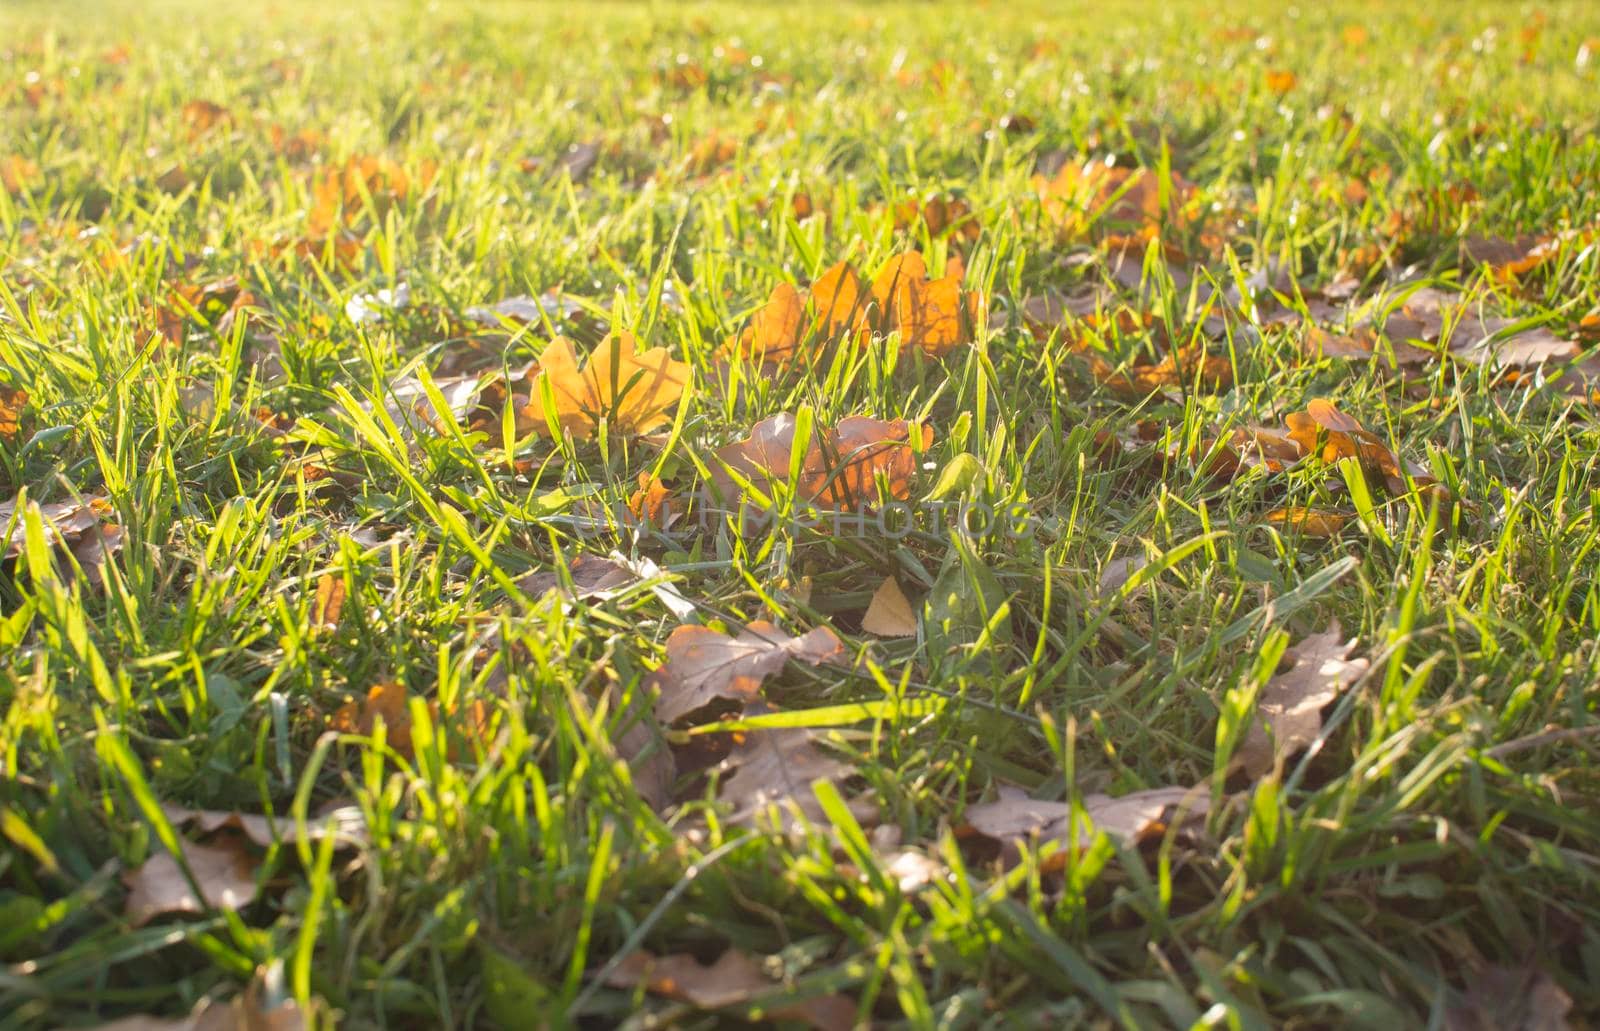 Autumn foliage. Autumn leaves fallen on the ground. Fall leaf. by kajasja